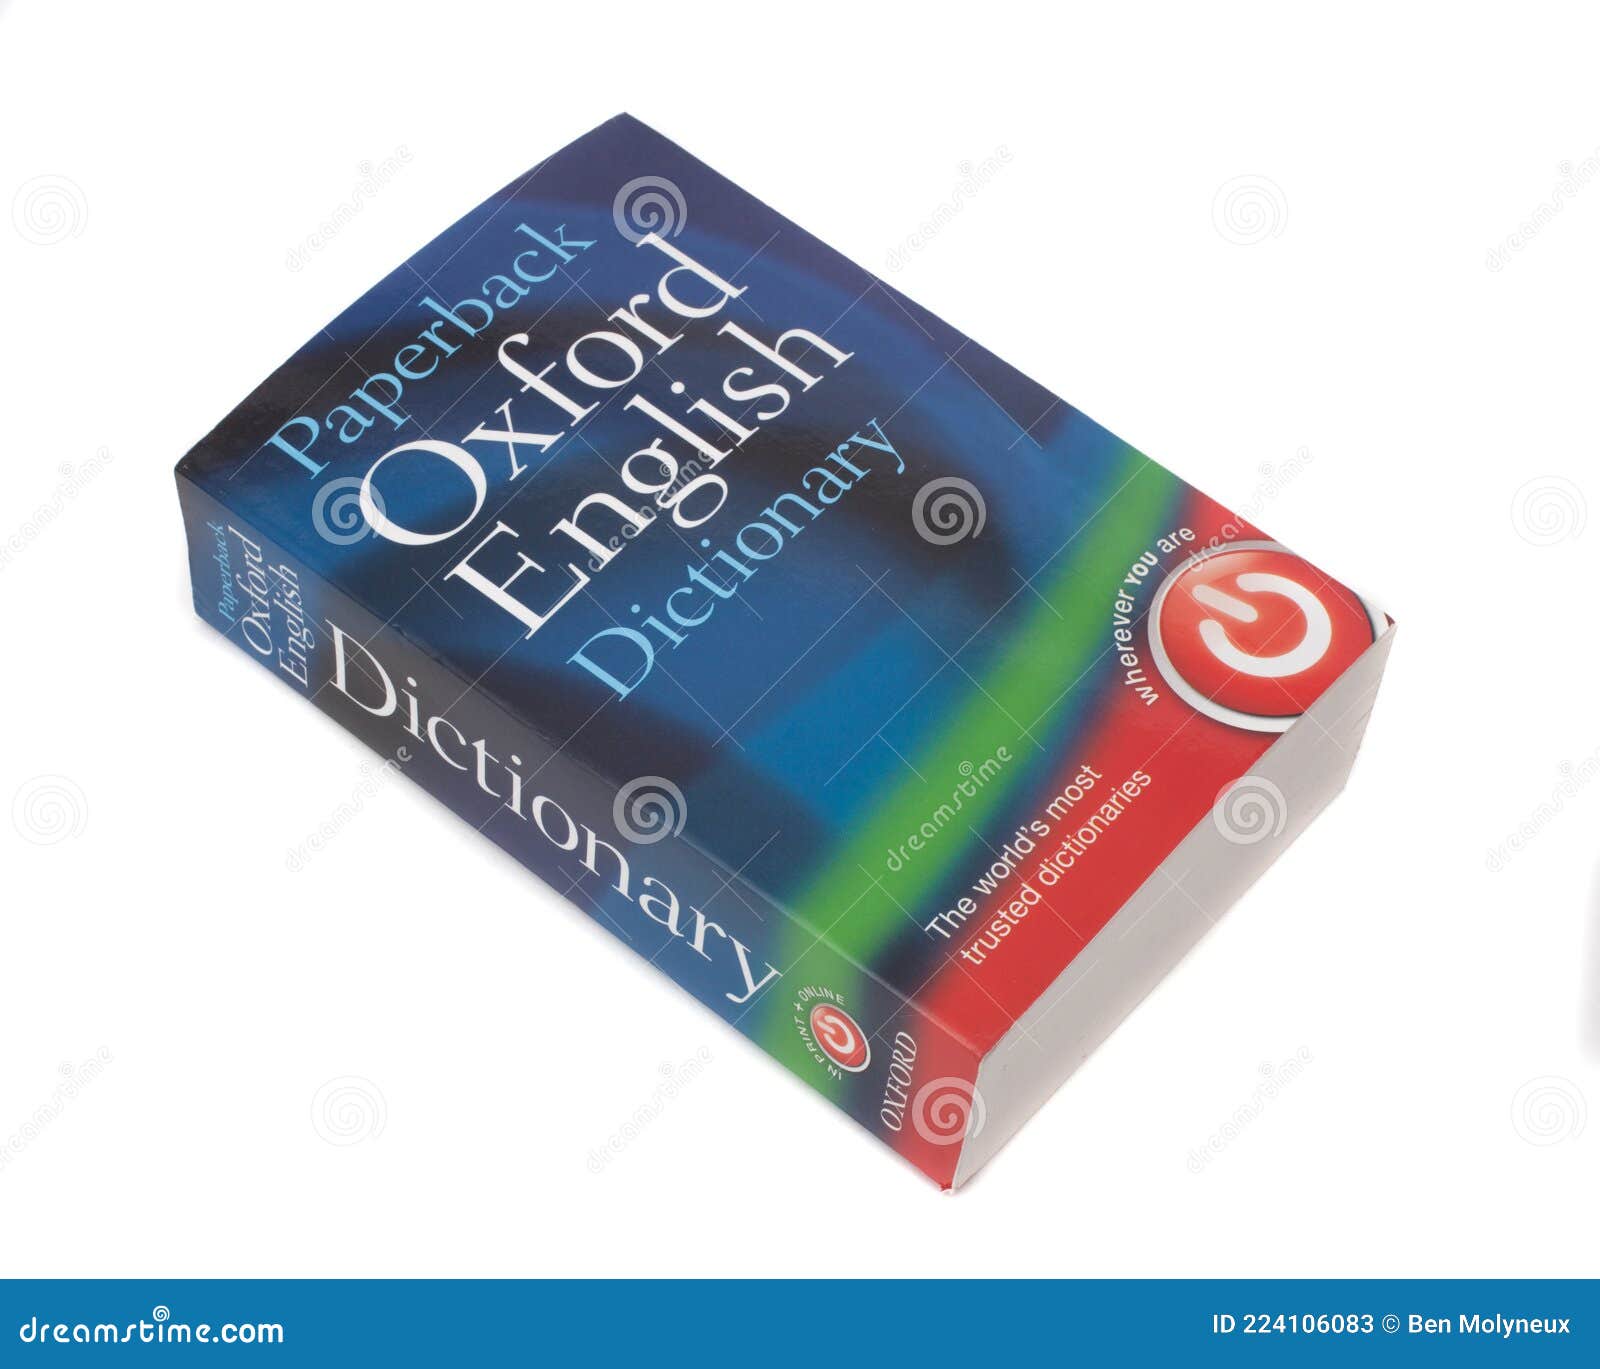 oxford english to english dictionary